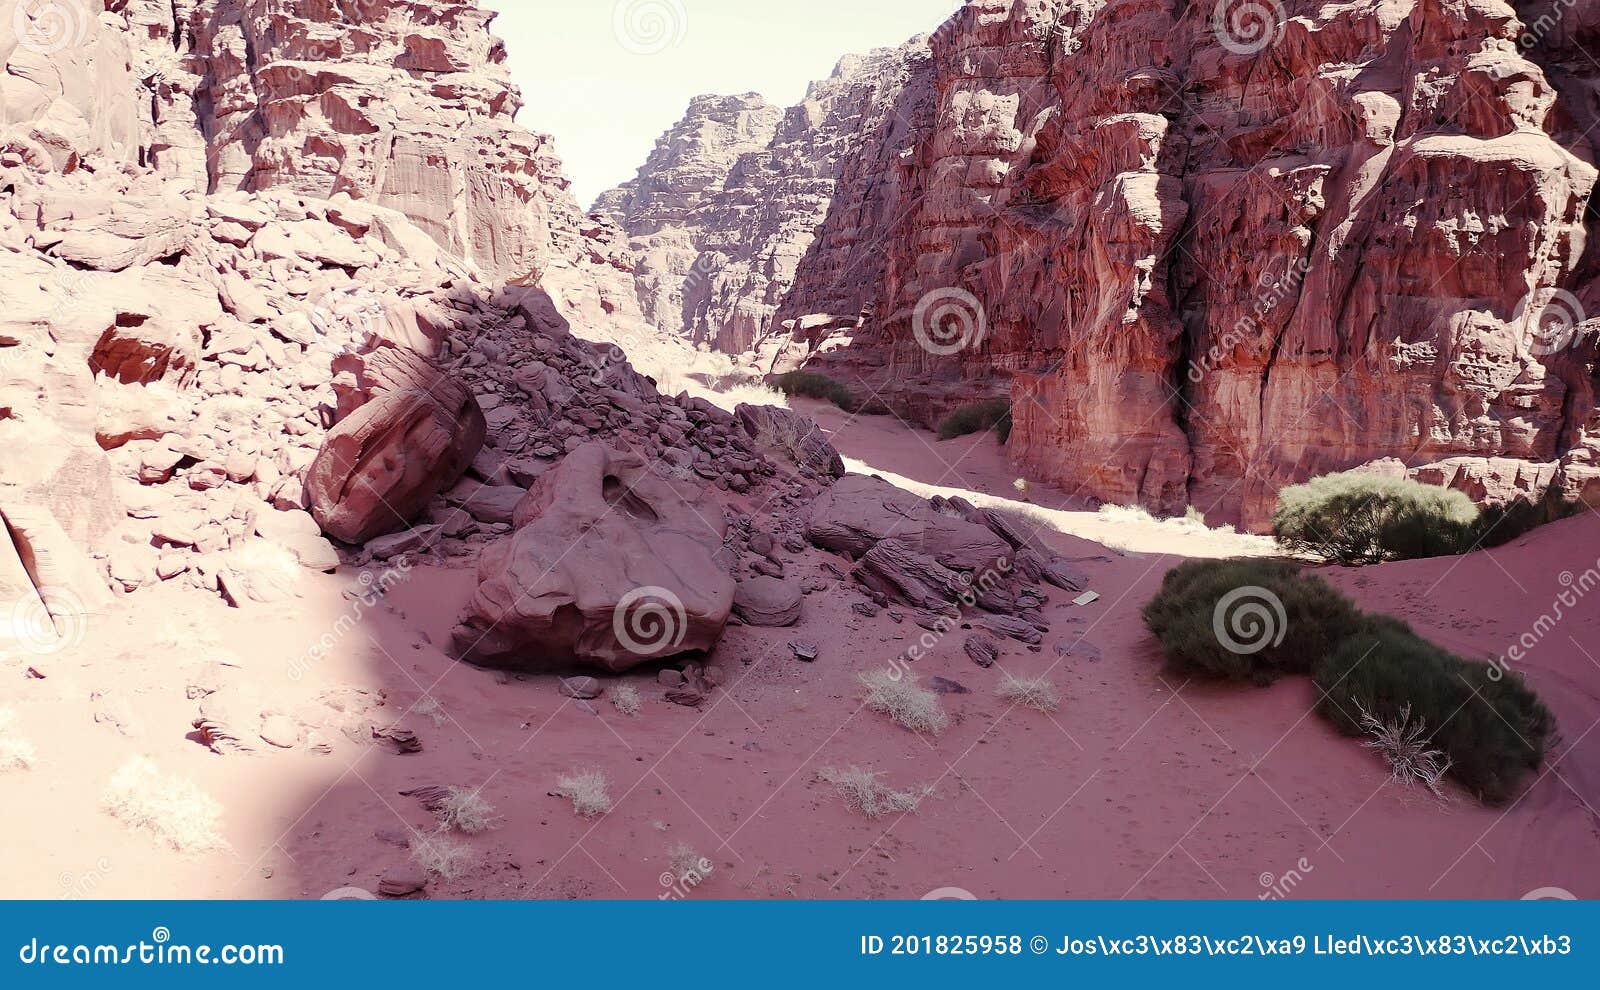 aerial view of the umm rashid canyon in the national park of wadi rum, jordan.